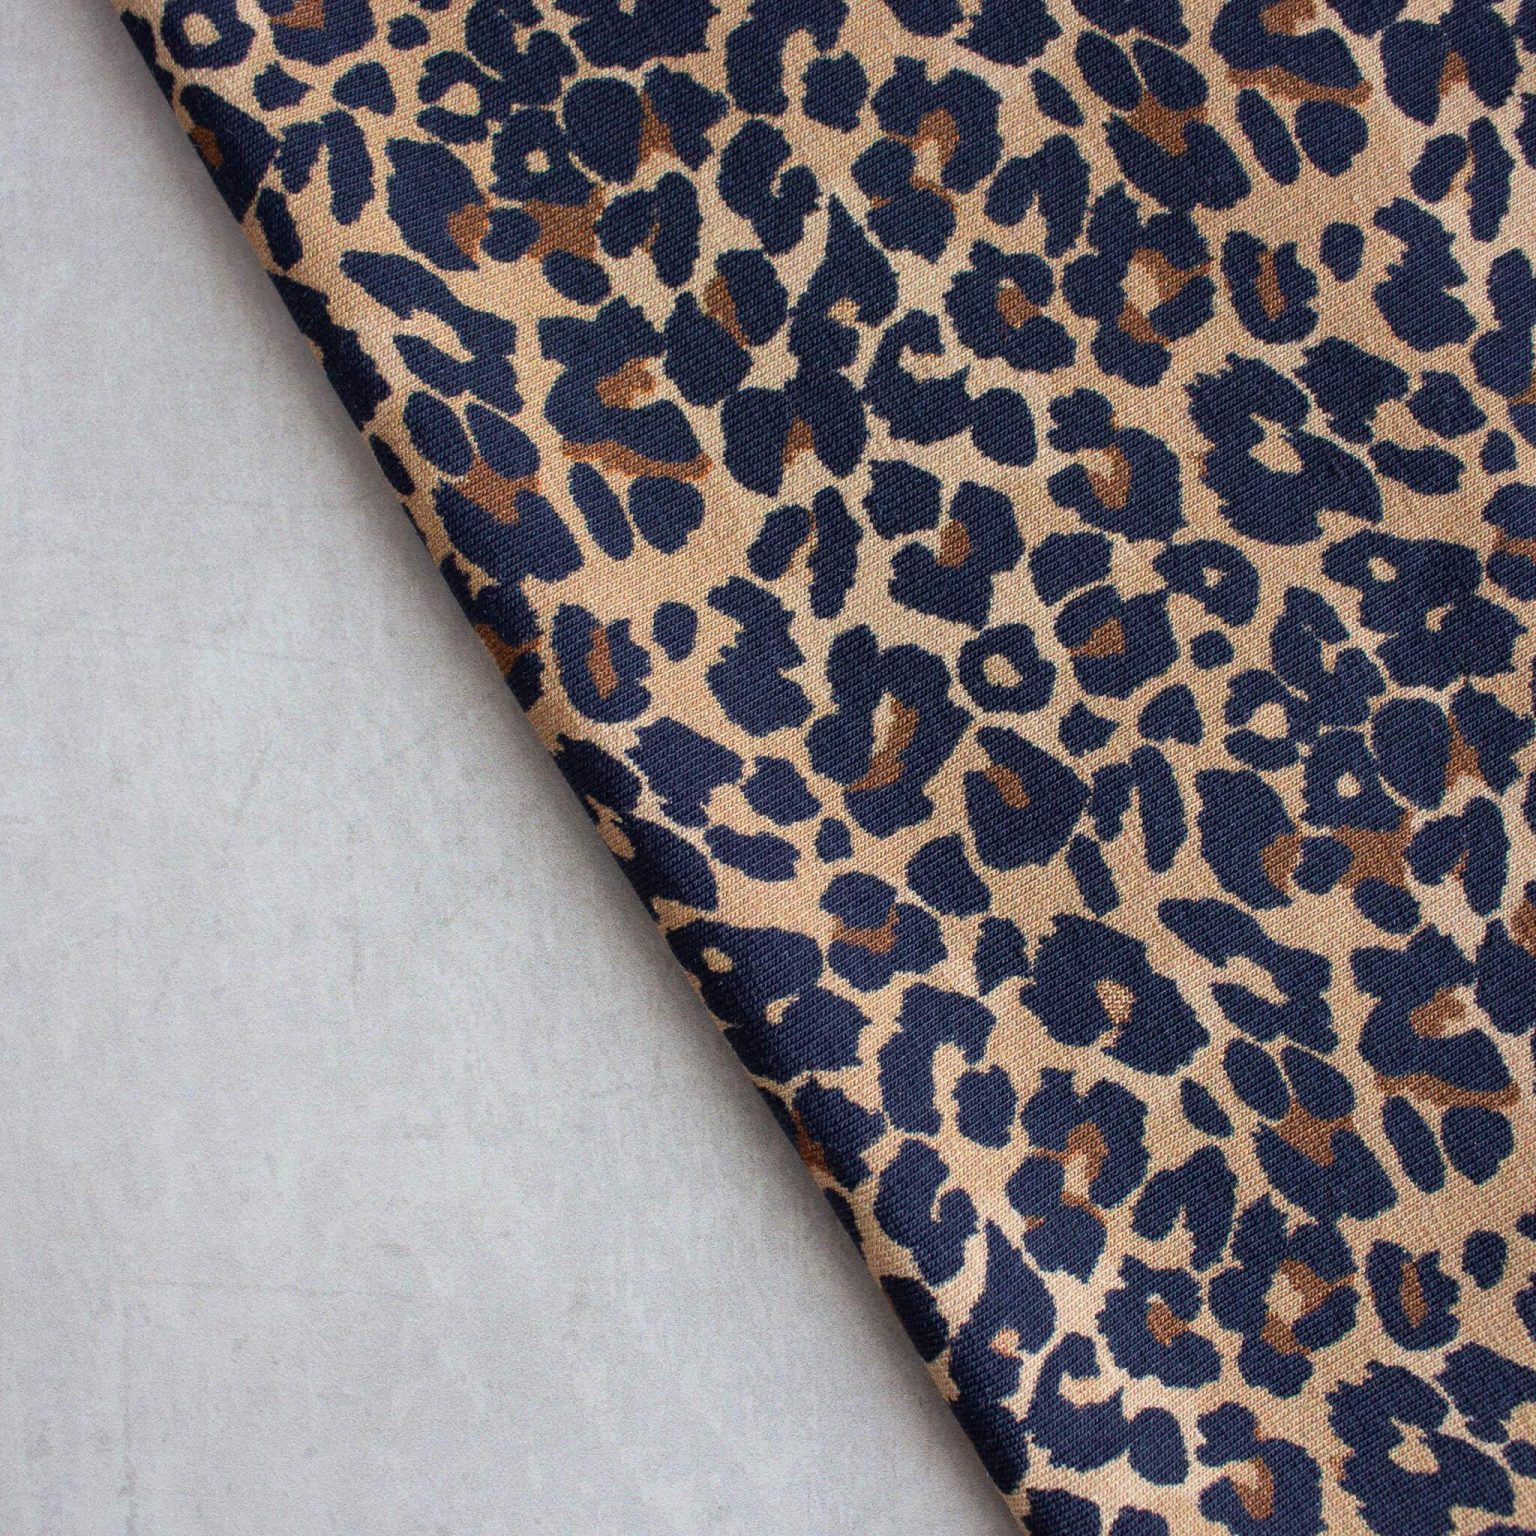 Leopard print jersey fabric close up